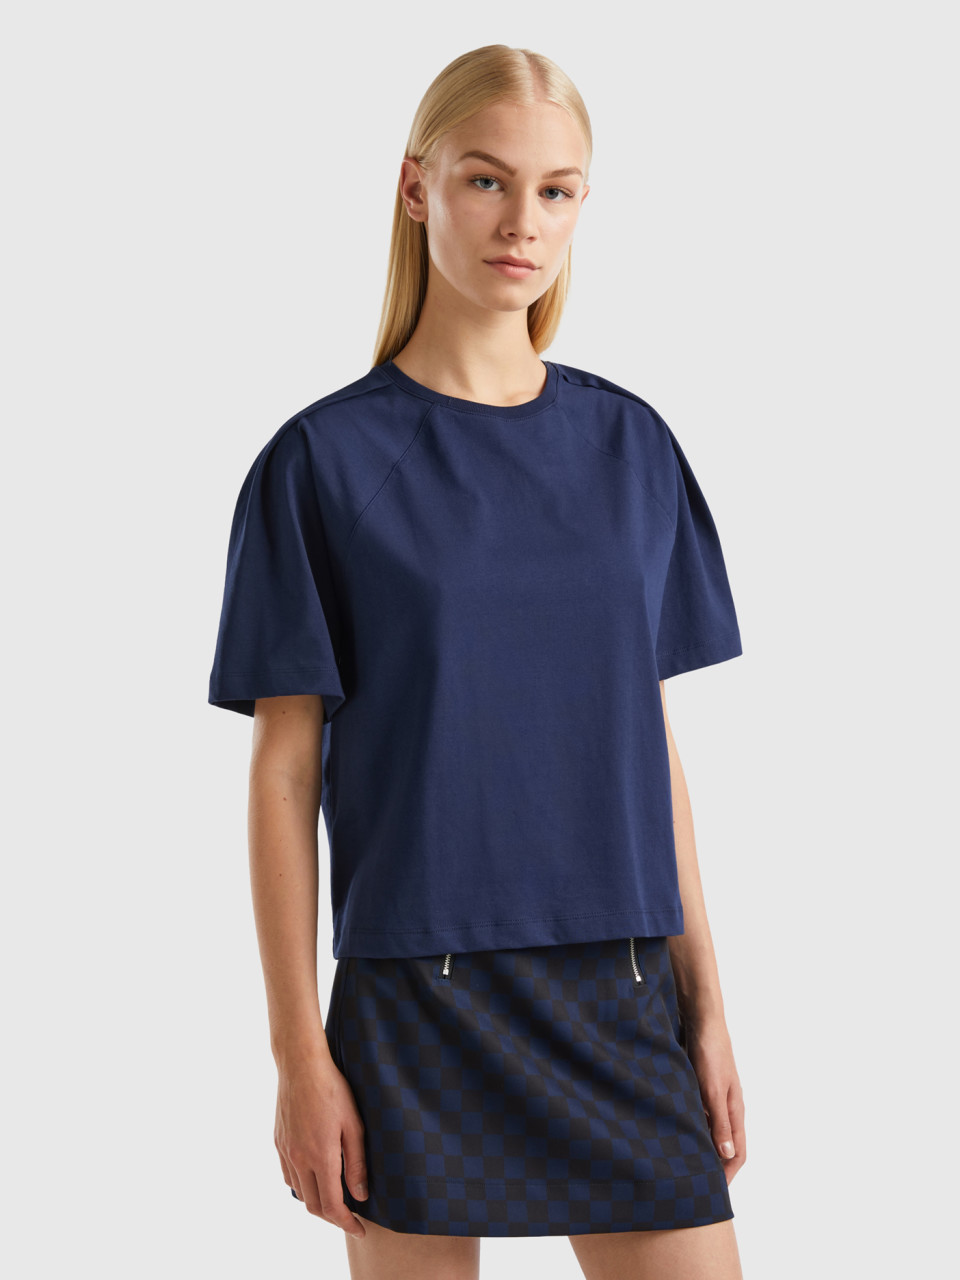 Benetton, Boxy Fit T-shirt, Dark Blue, Women